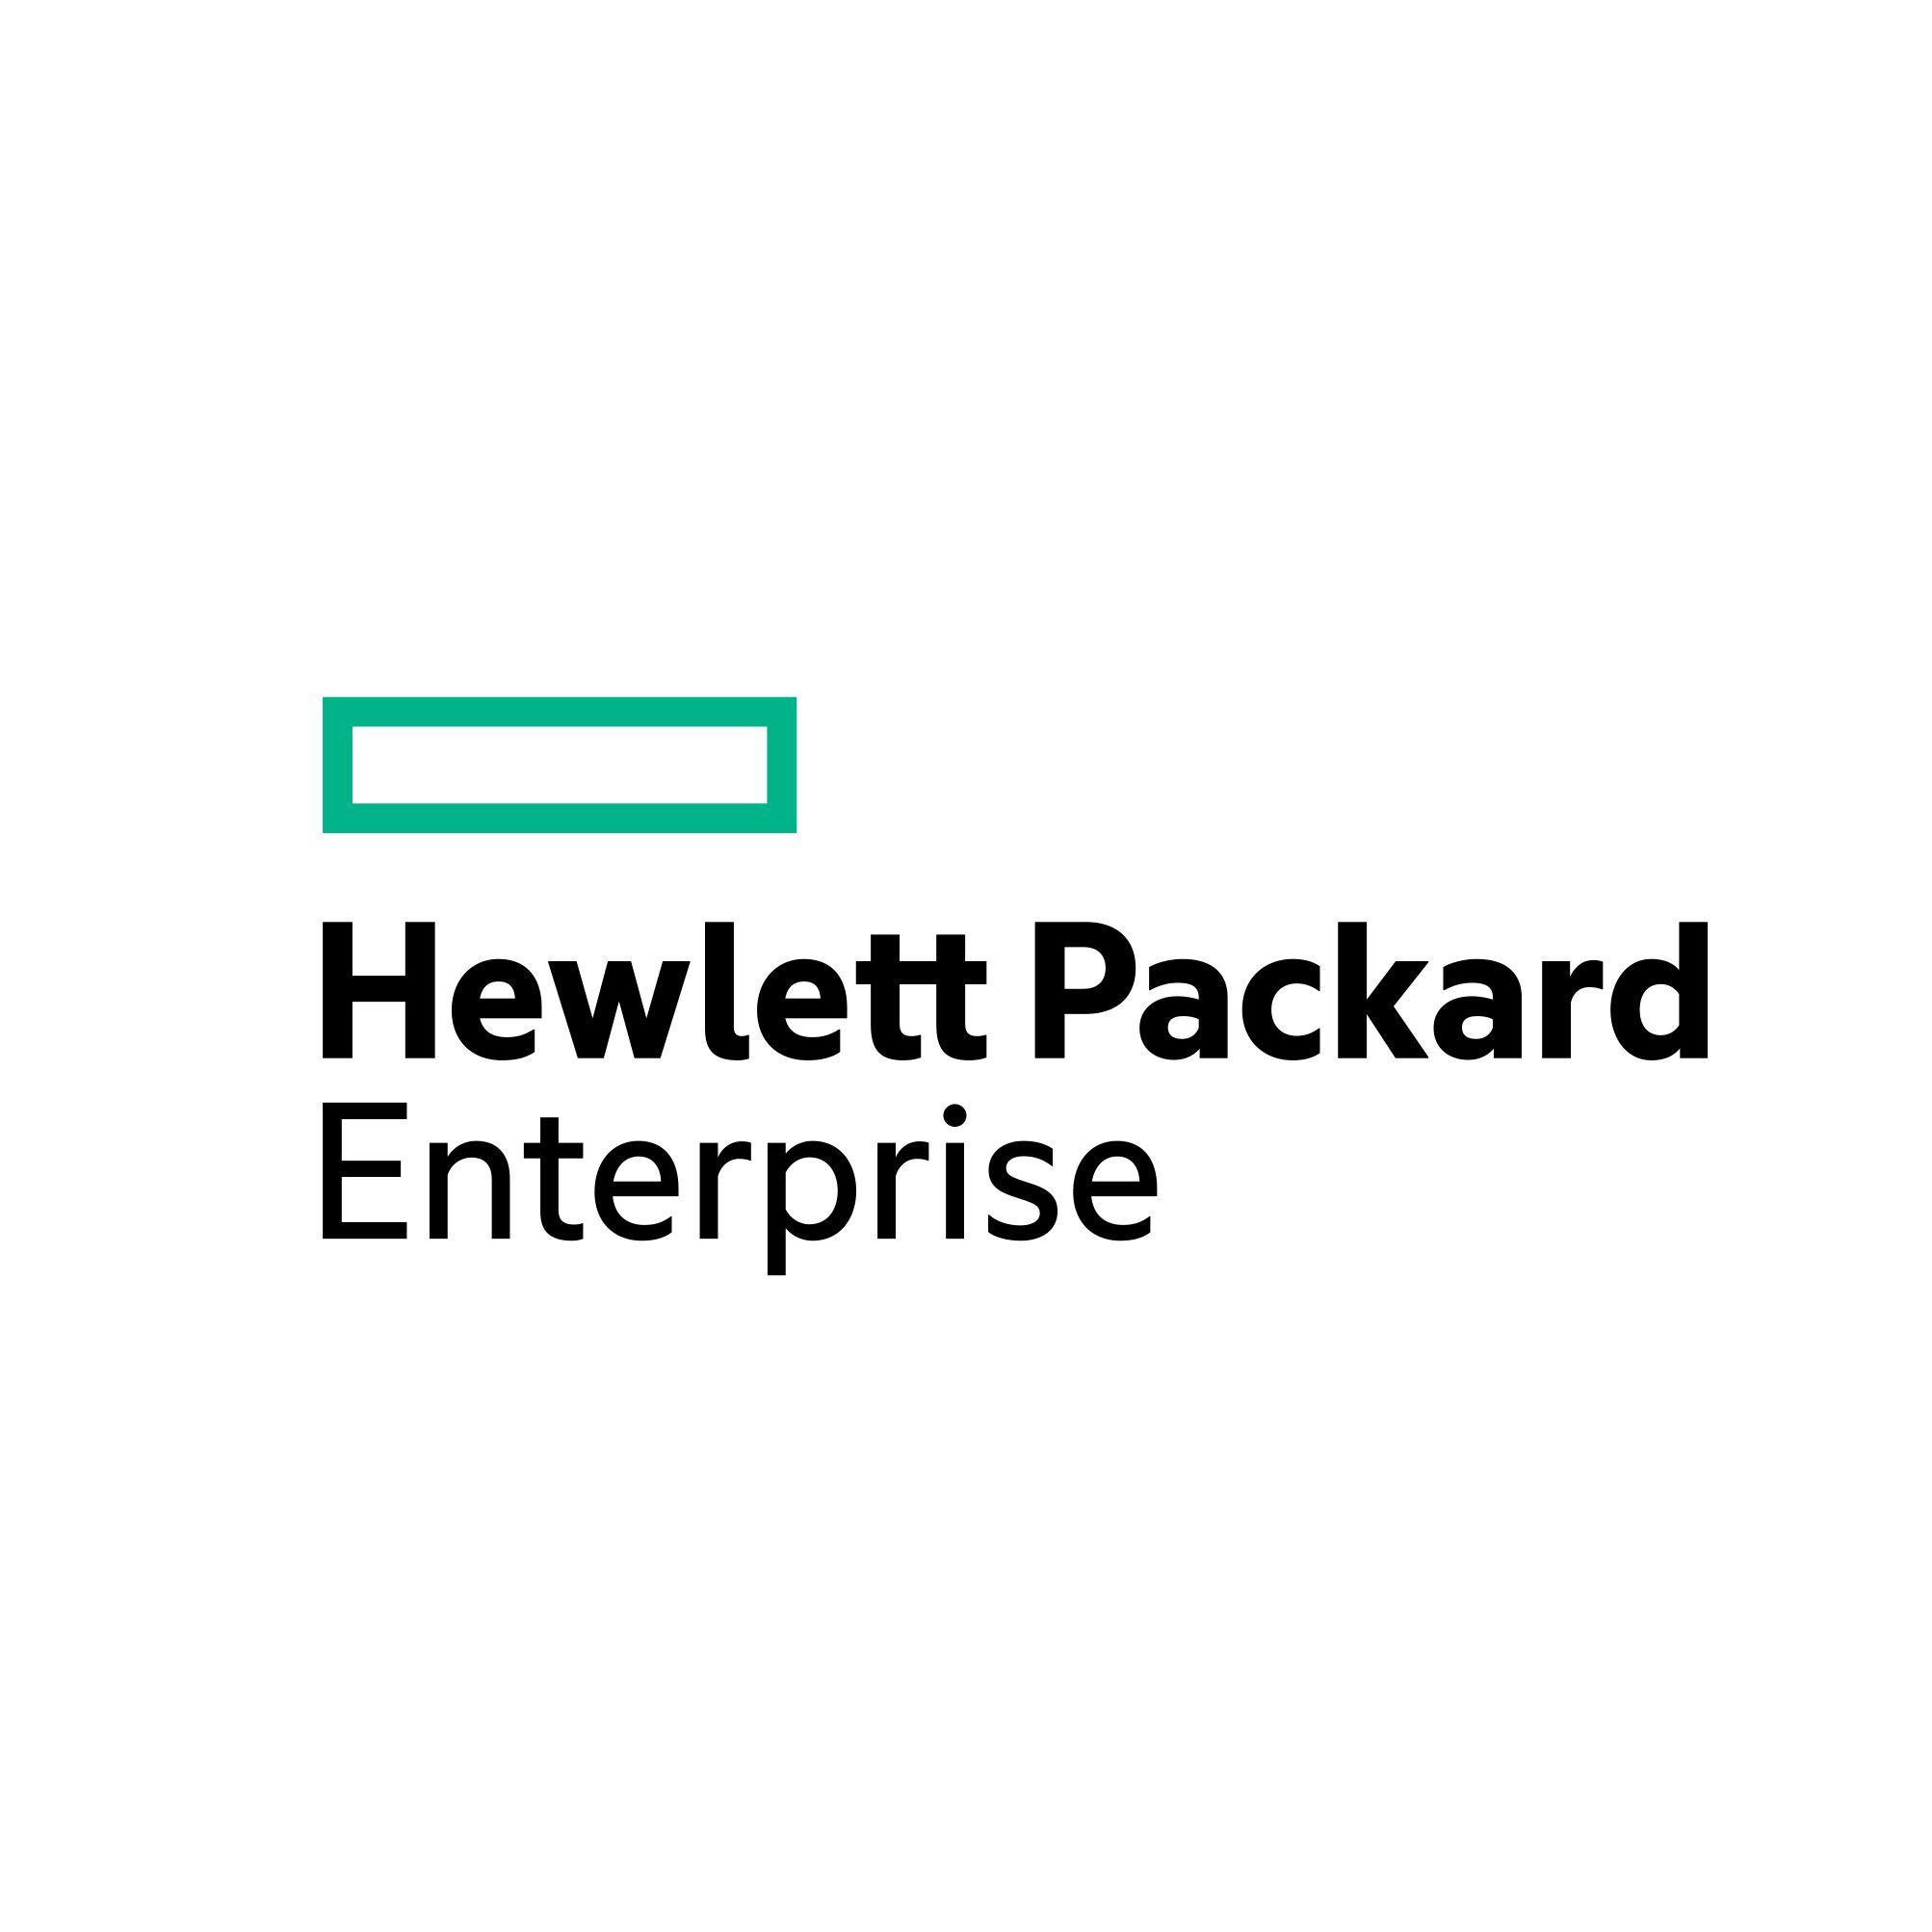 HP Corporation Logo - HP Enterprise splits again